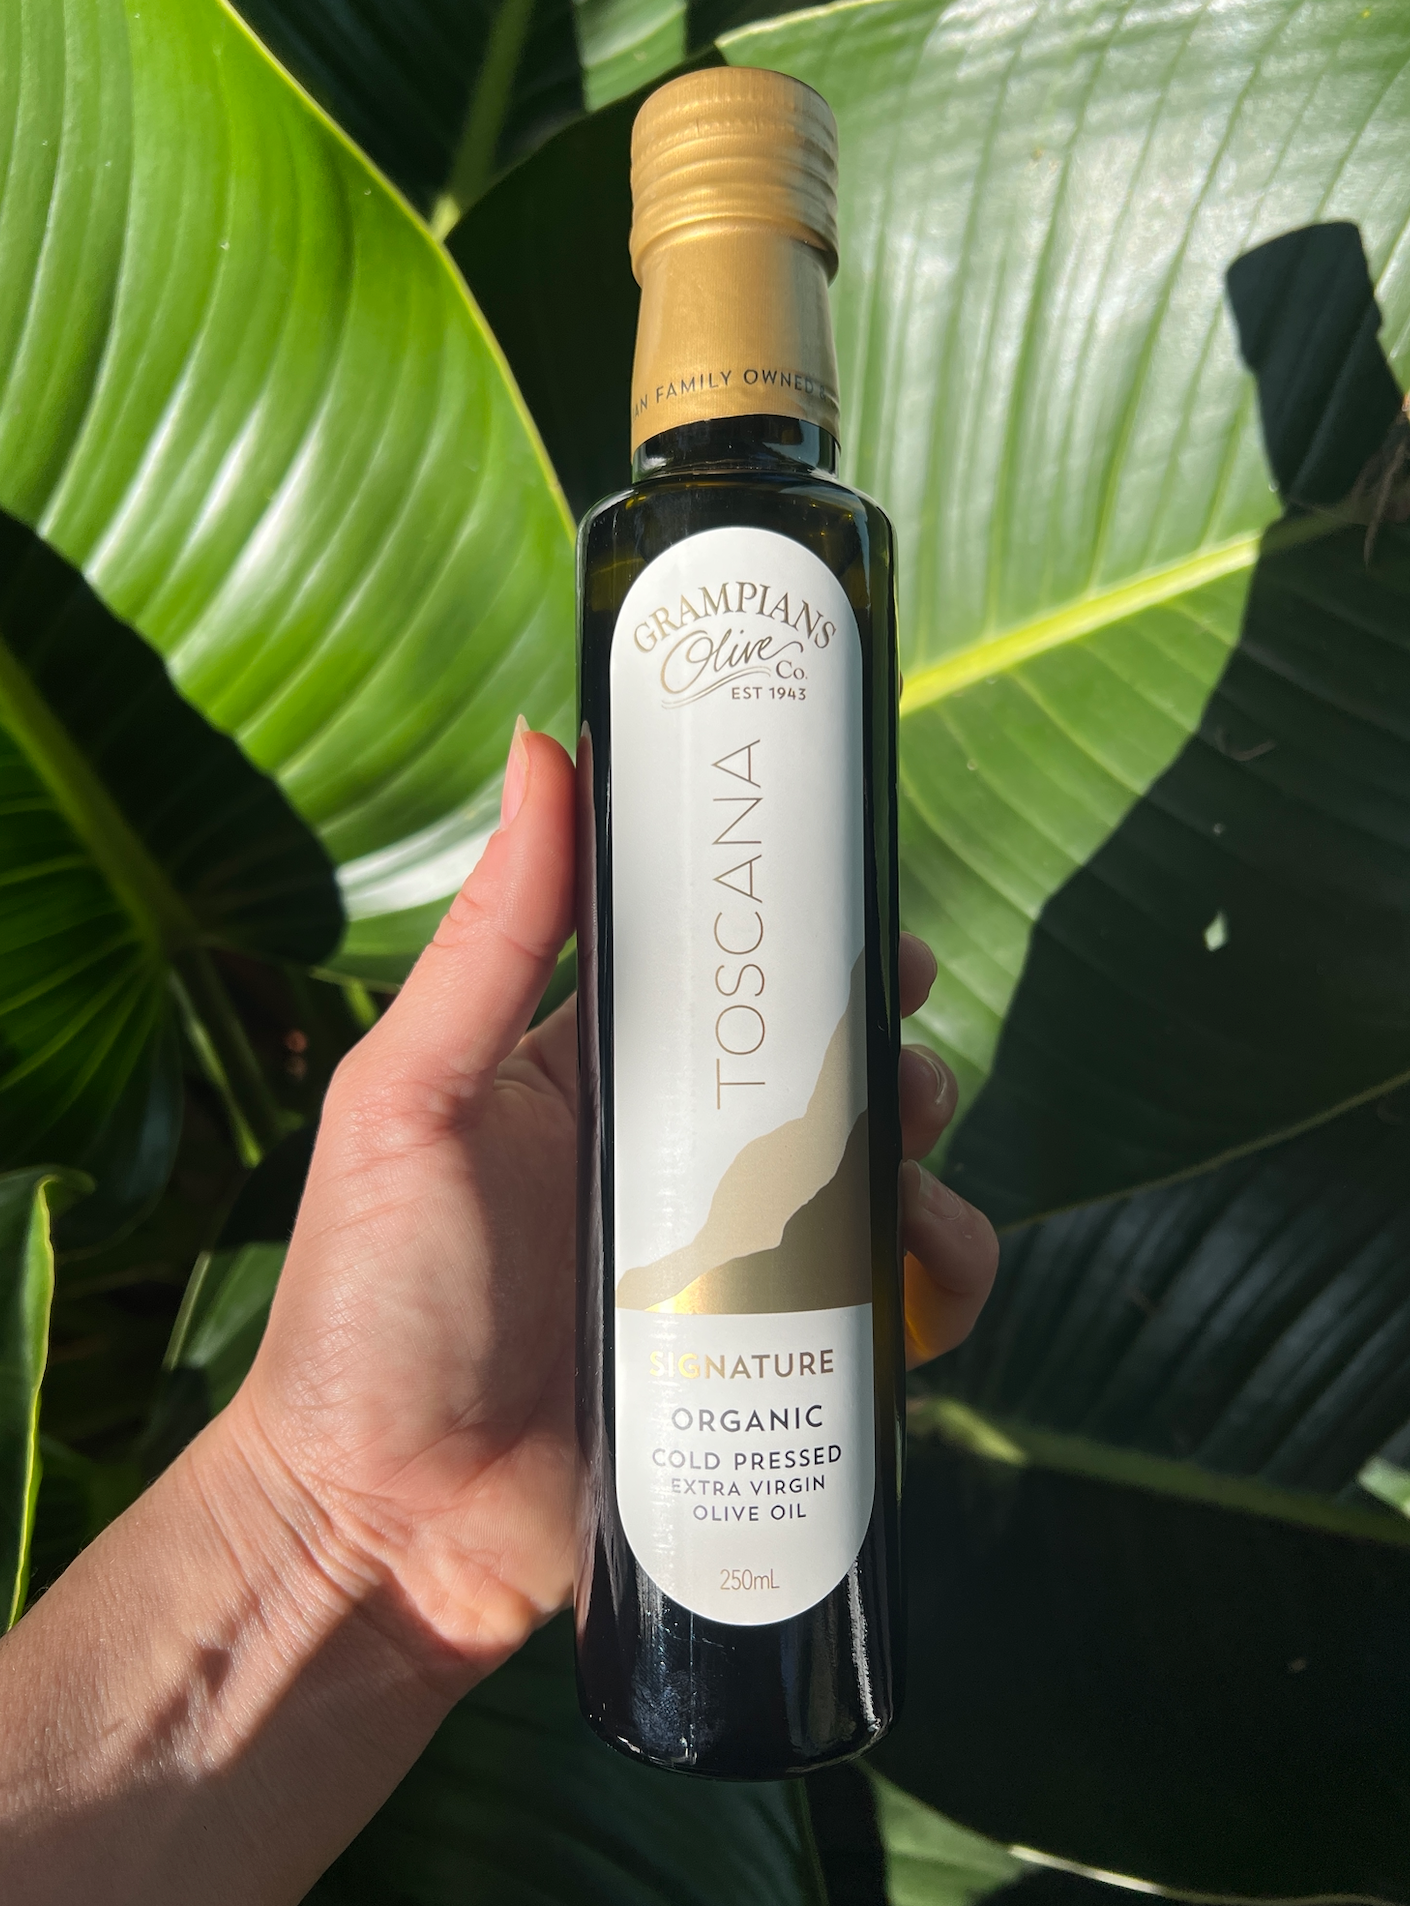 Organic Australian Extra Virgin Olive Oil 250ml - Grampian's